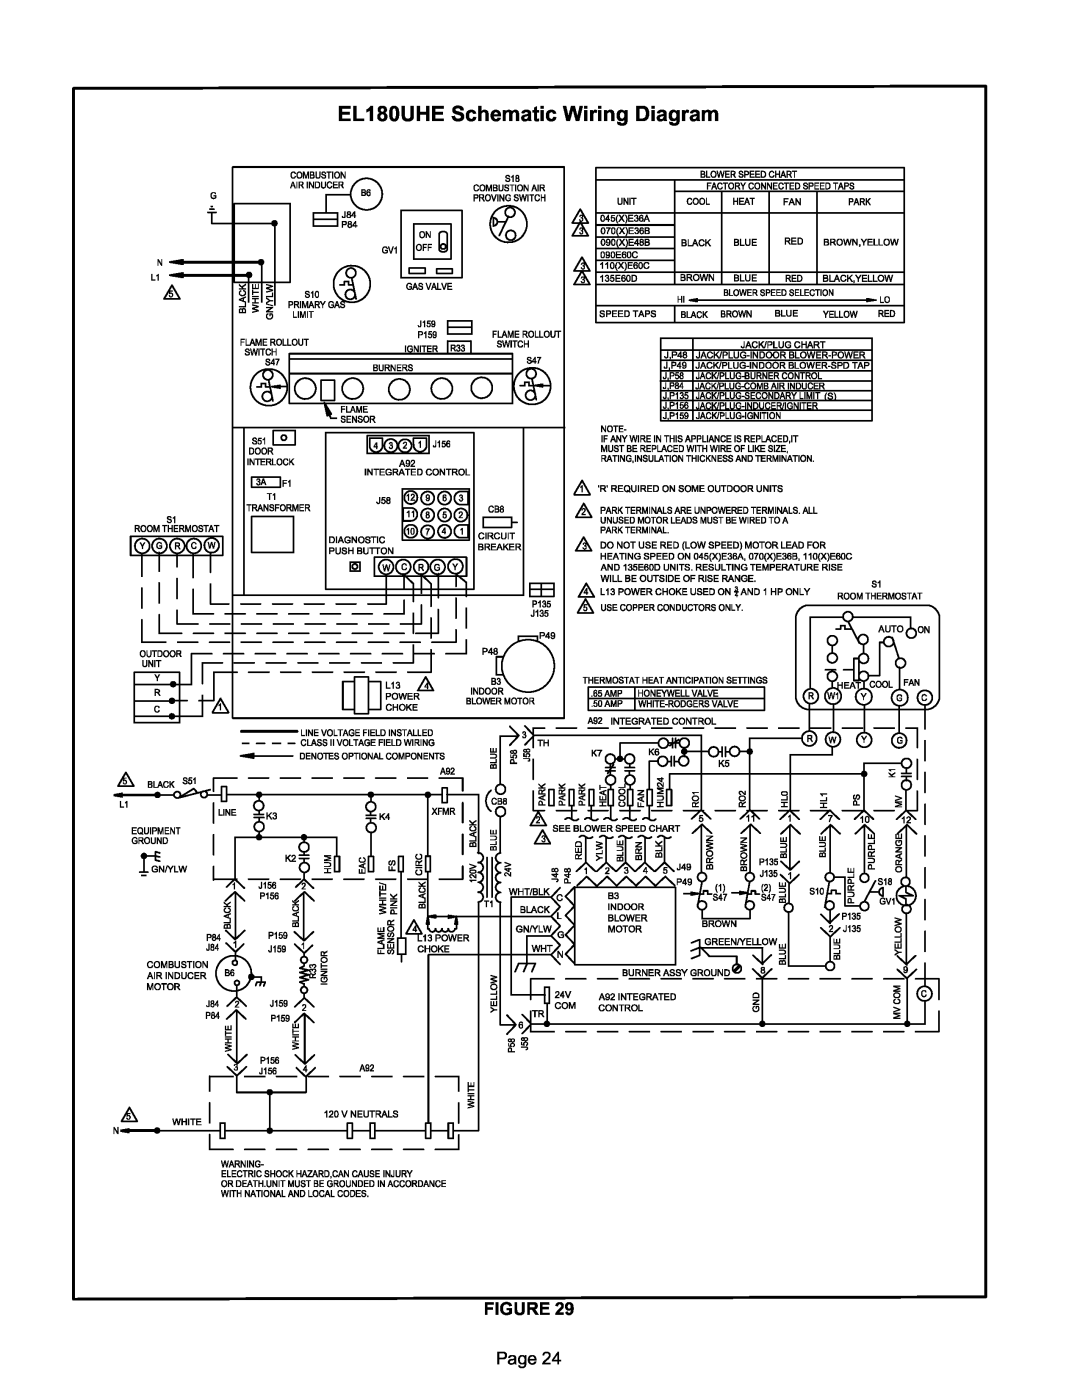 Lennox International Inc installation instructions EL180UHE Schematic Wiring Diagram 